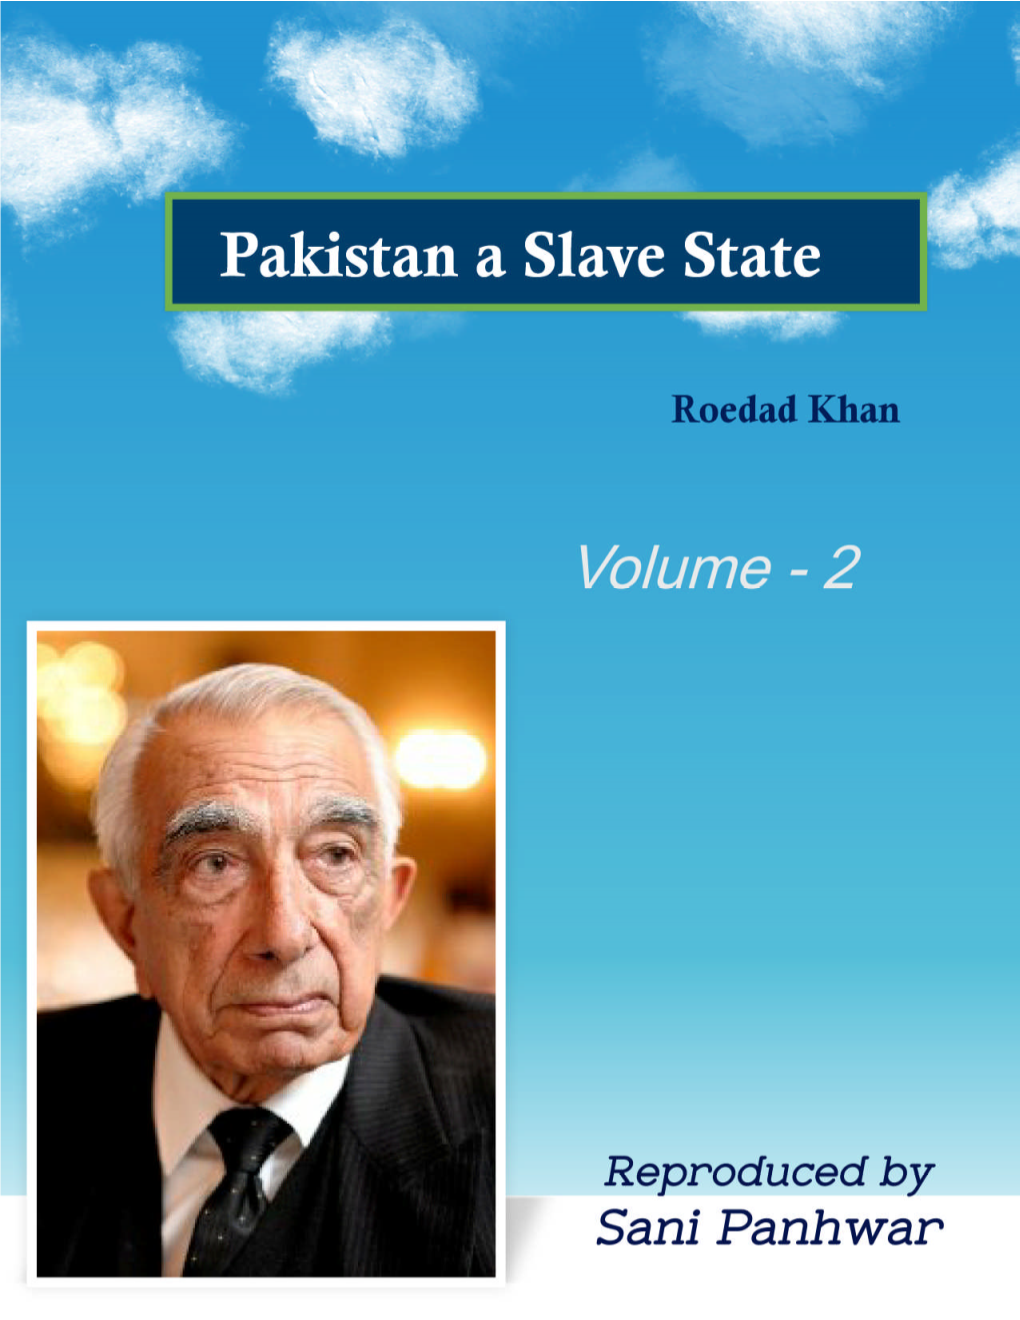 Pakistan a Slave State Vol II, by Roedad Khan